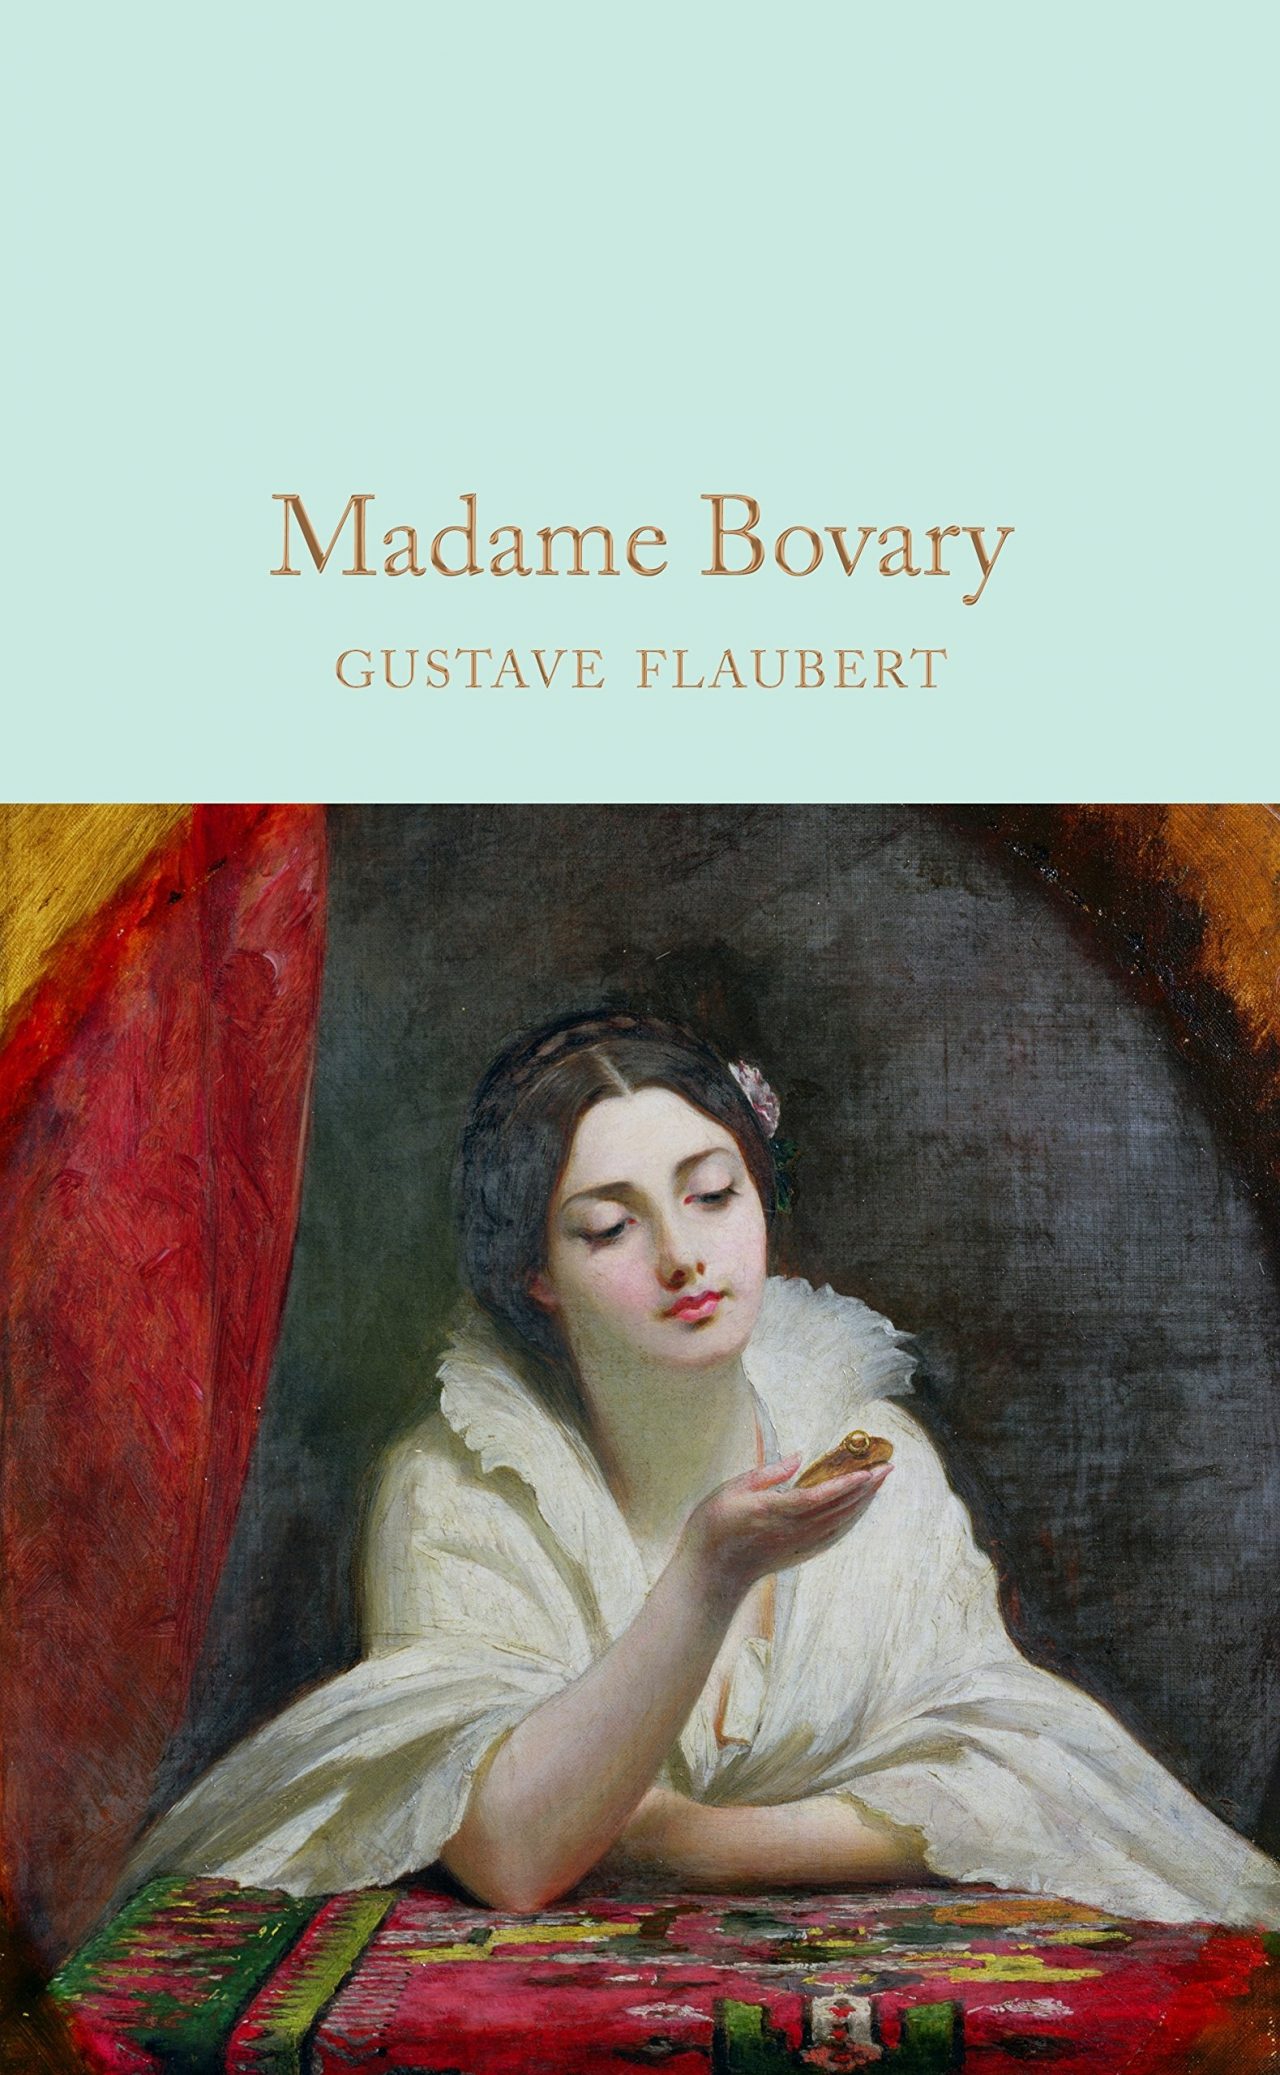 madame bovary author